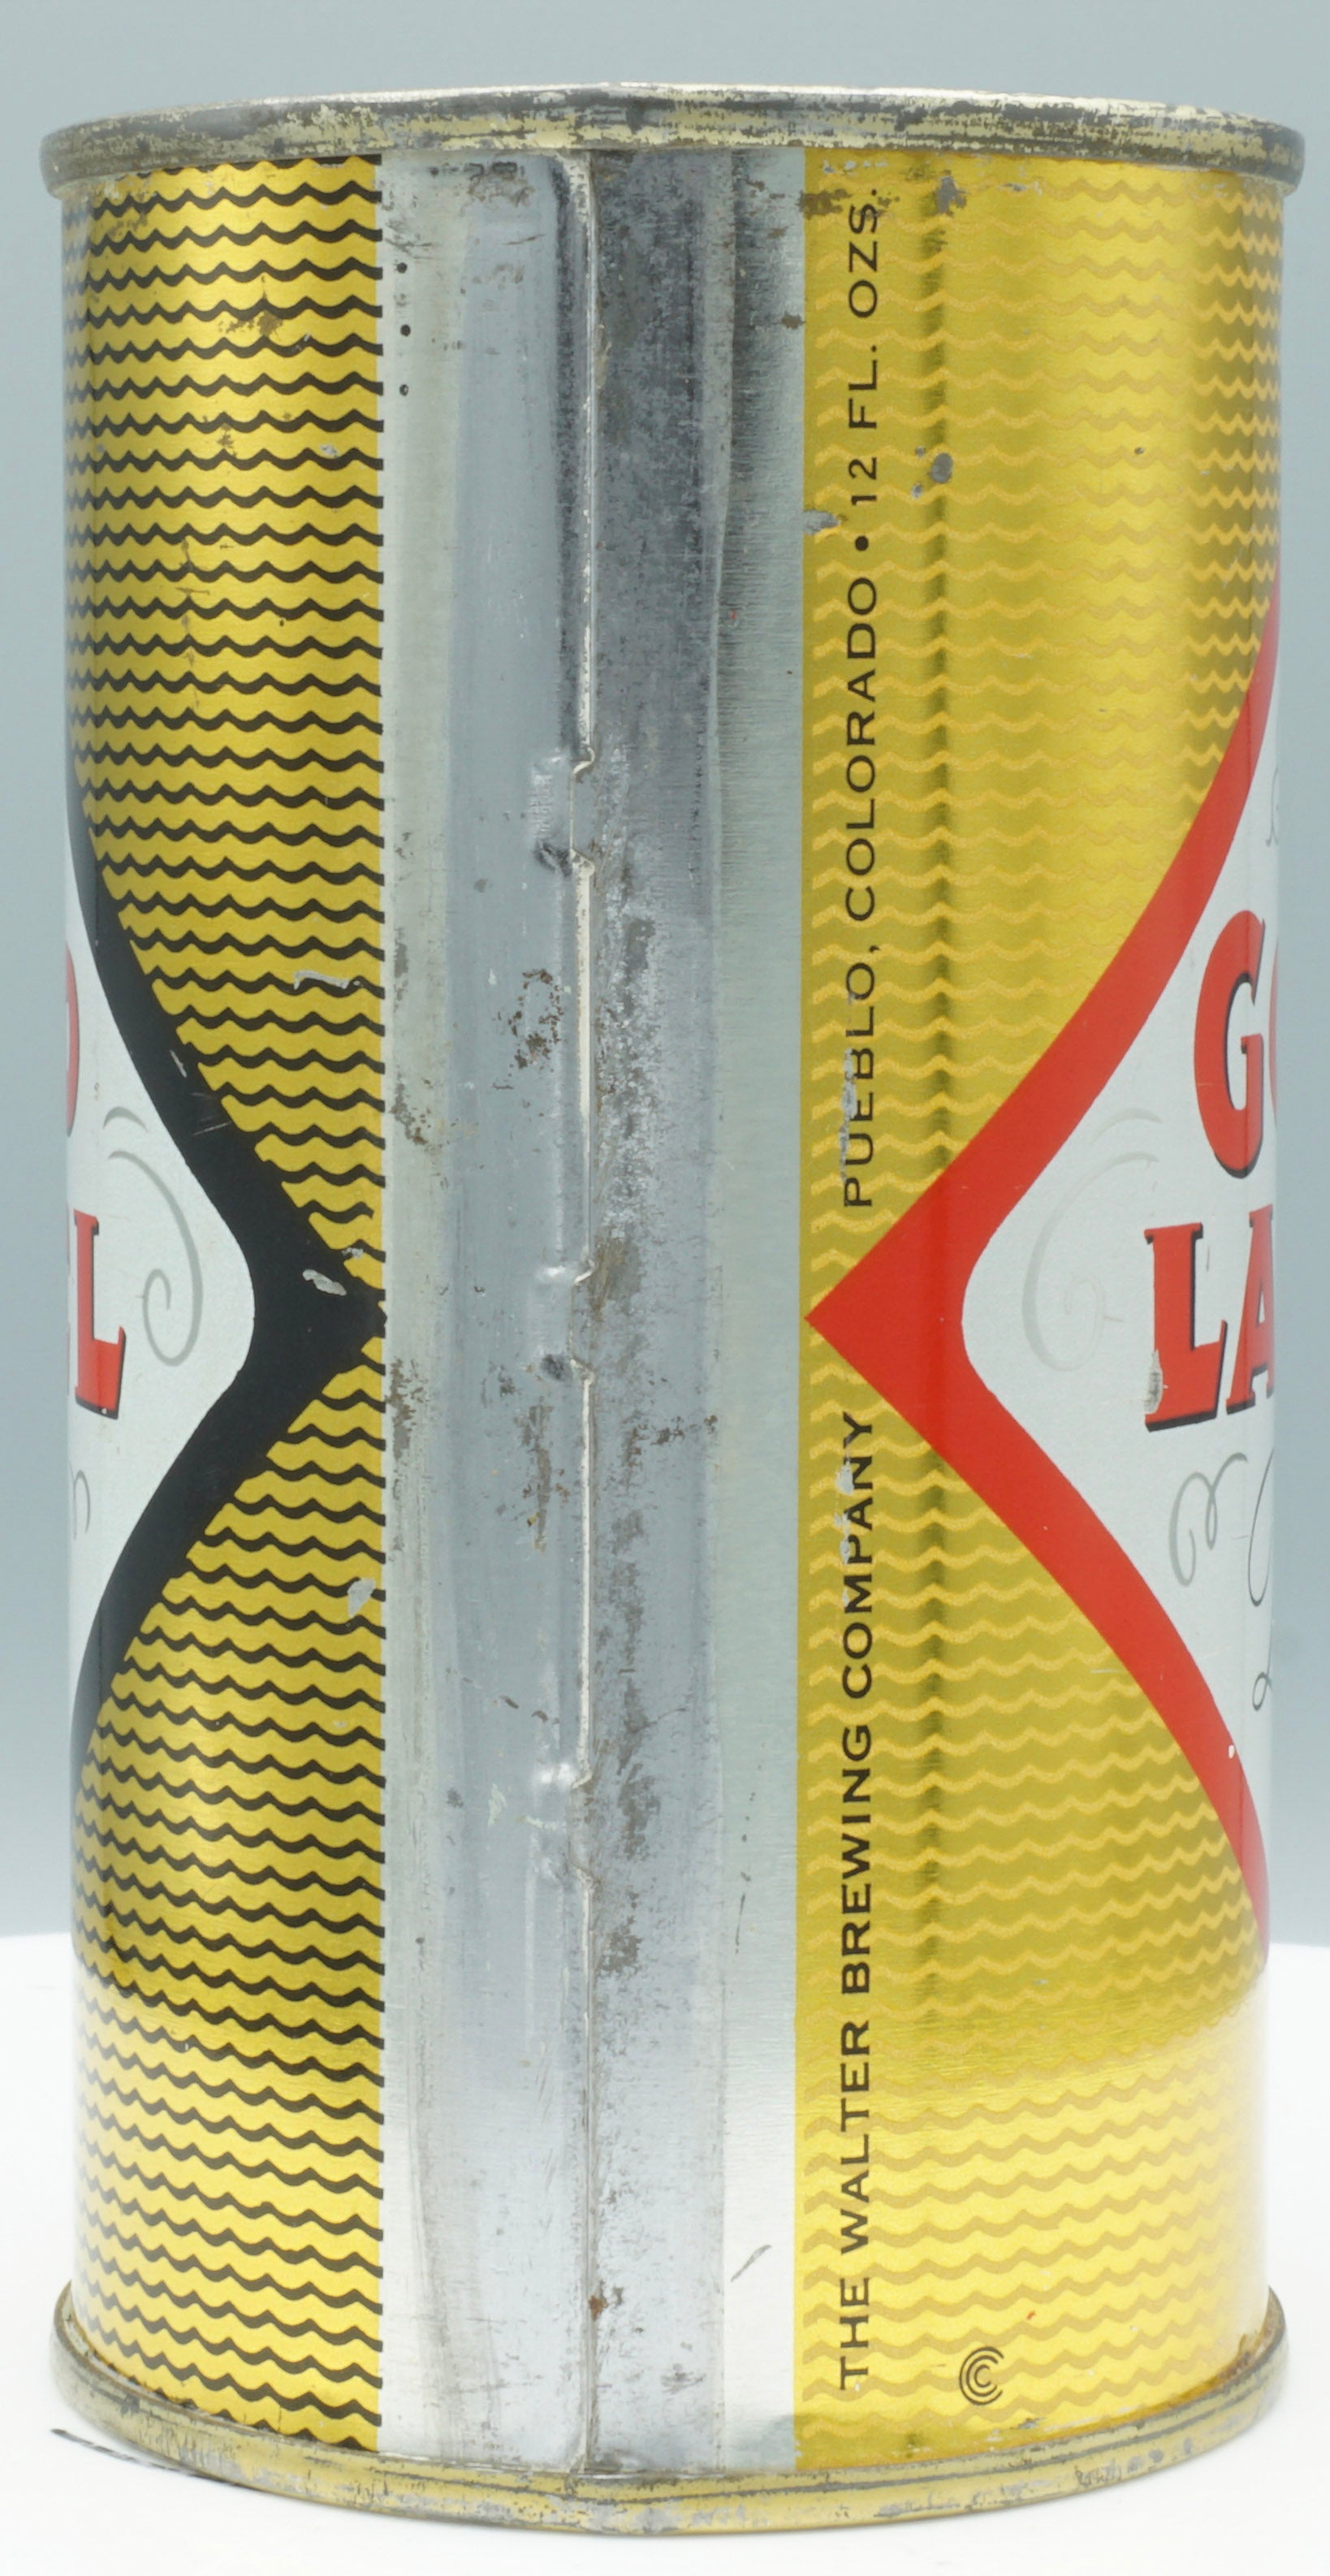 Gold Label Beer, USBC 72-01, Grade 1+